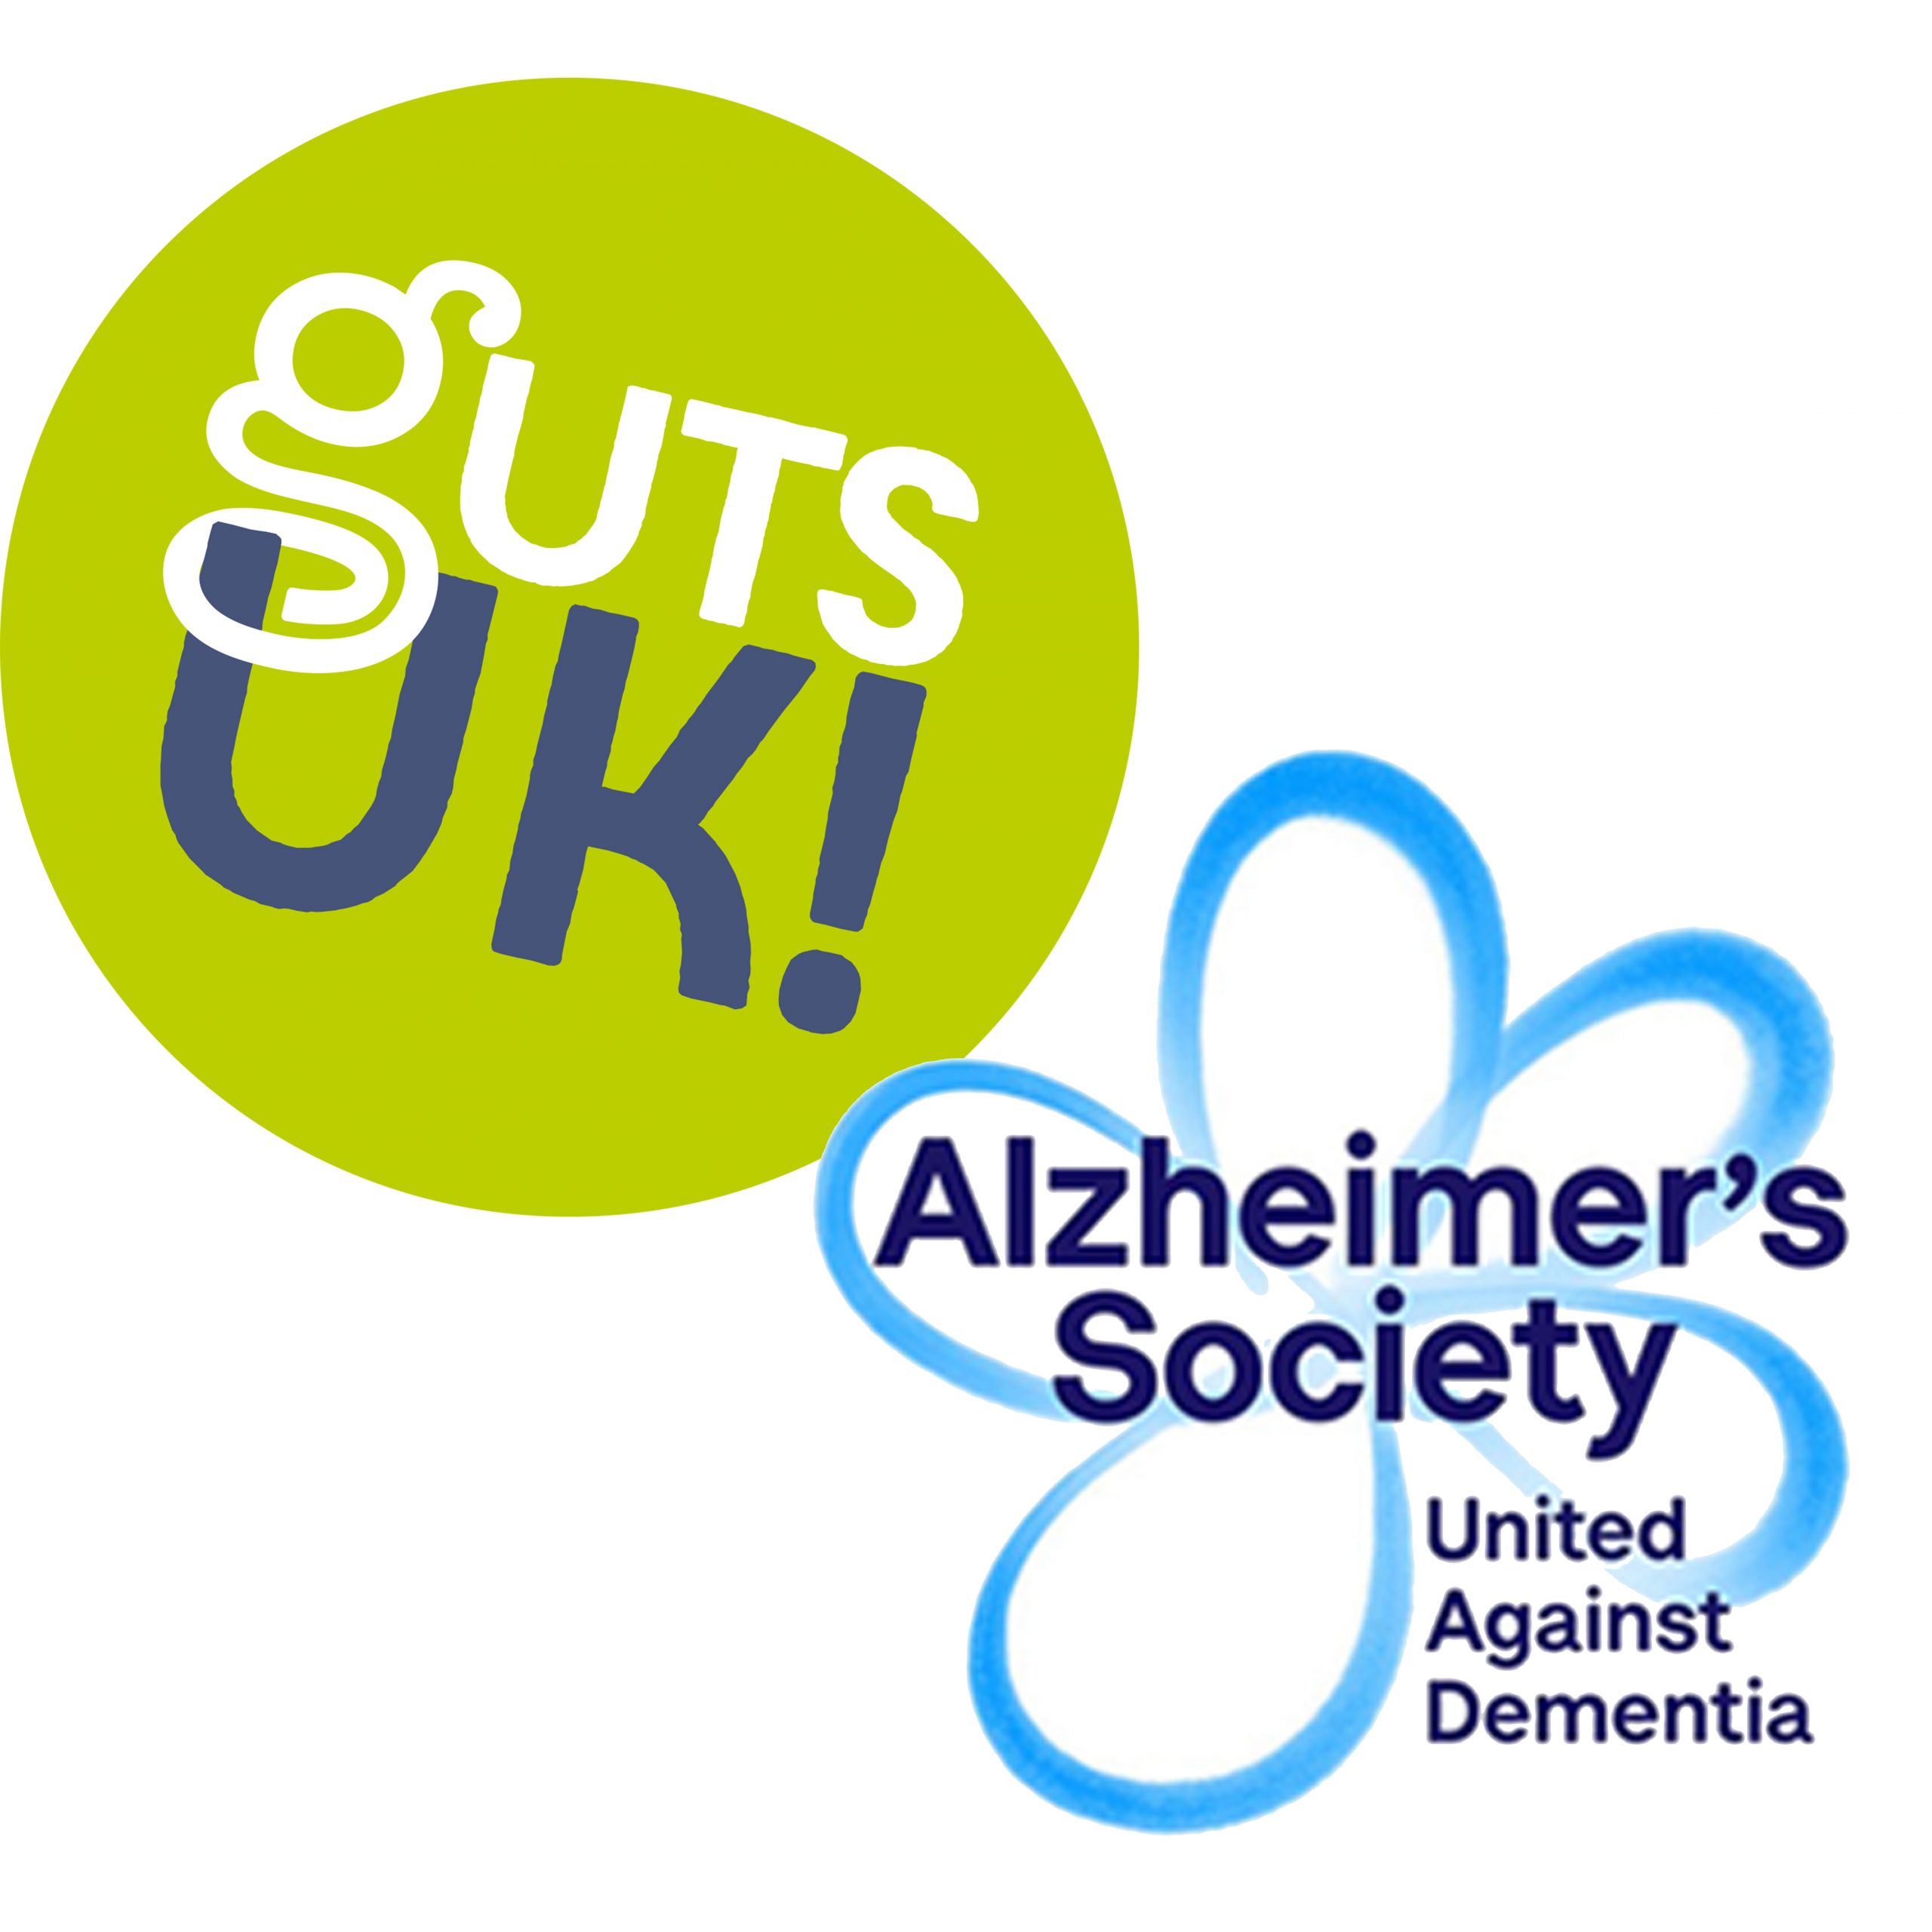 Alzheimers Society Logo and Guts UK logo